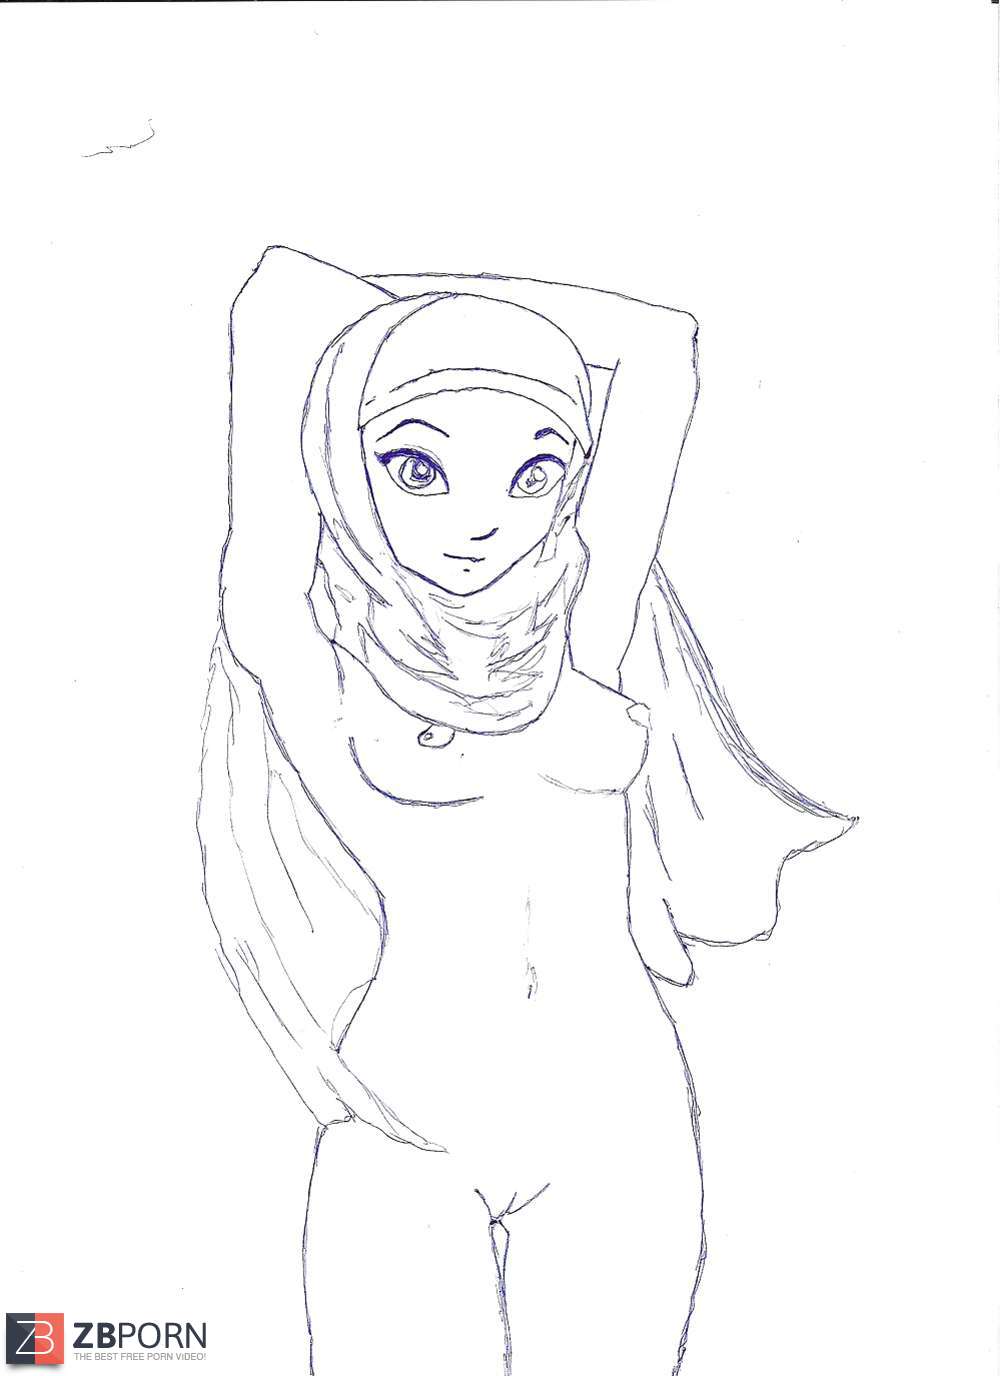 Hijab Muslim Cartoon Zb Porn 